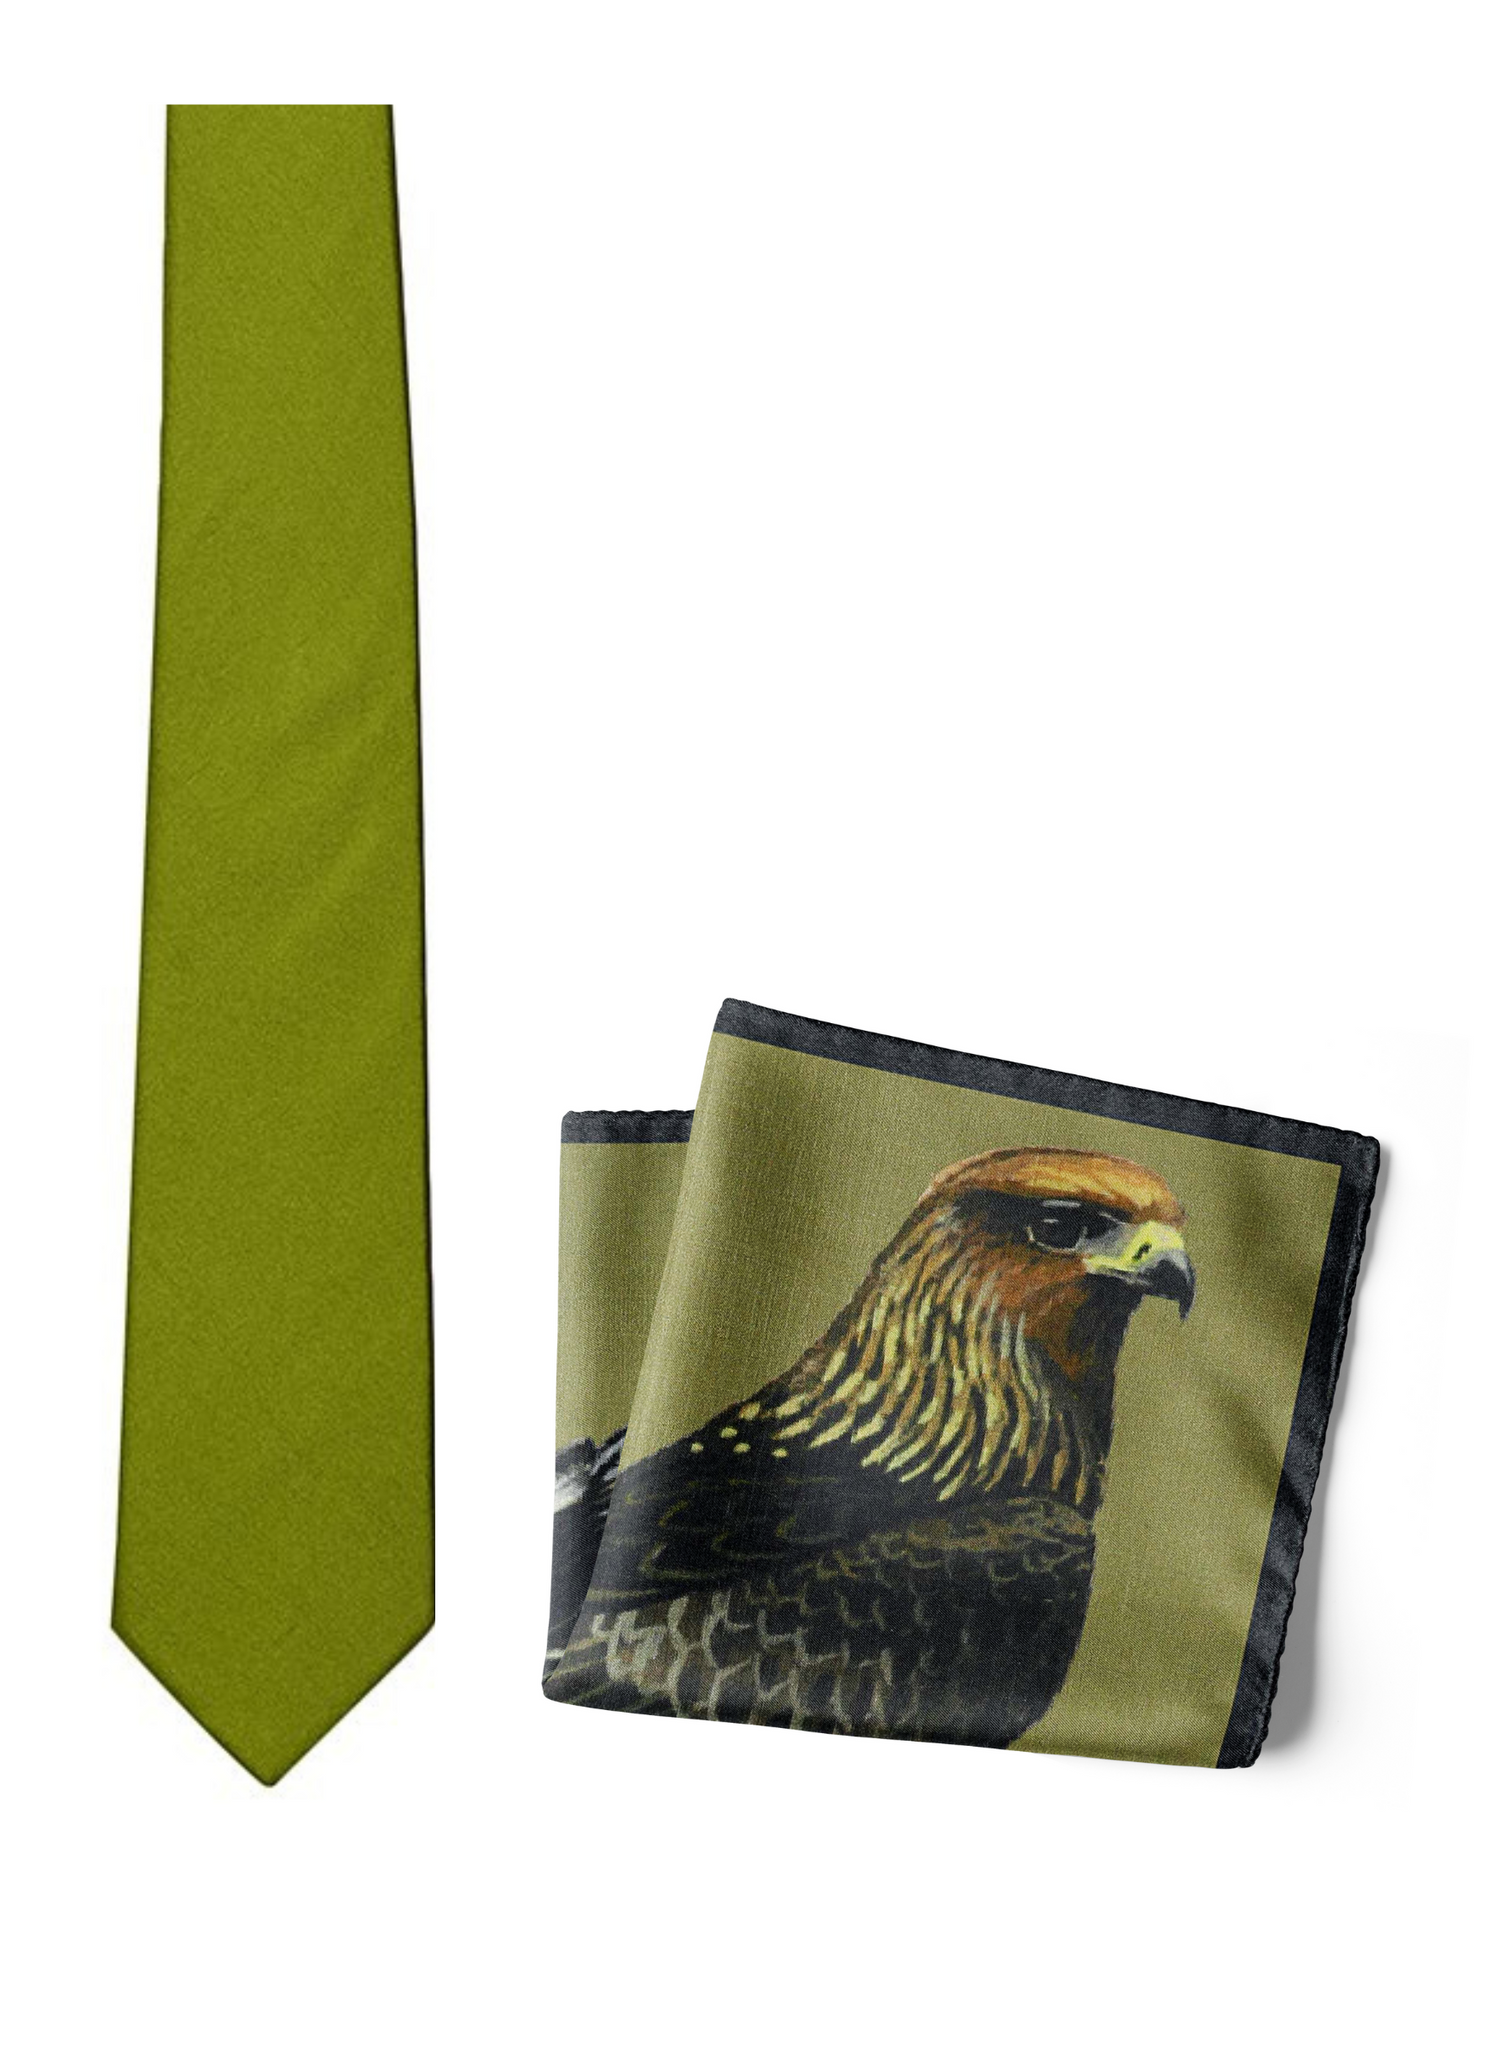 Chokore he Eagle Has Landed - Pocket Square & Chokore Mehandi Silk Tie - Solids range